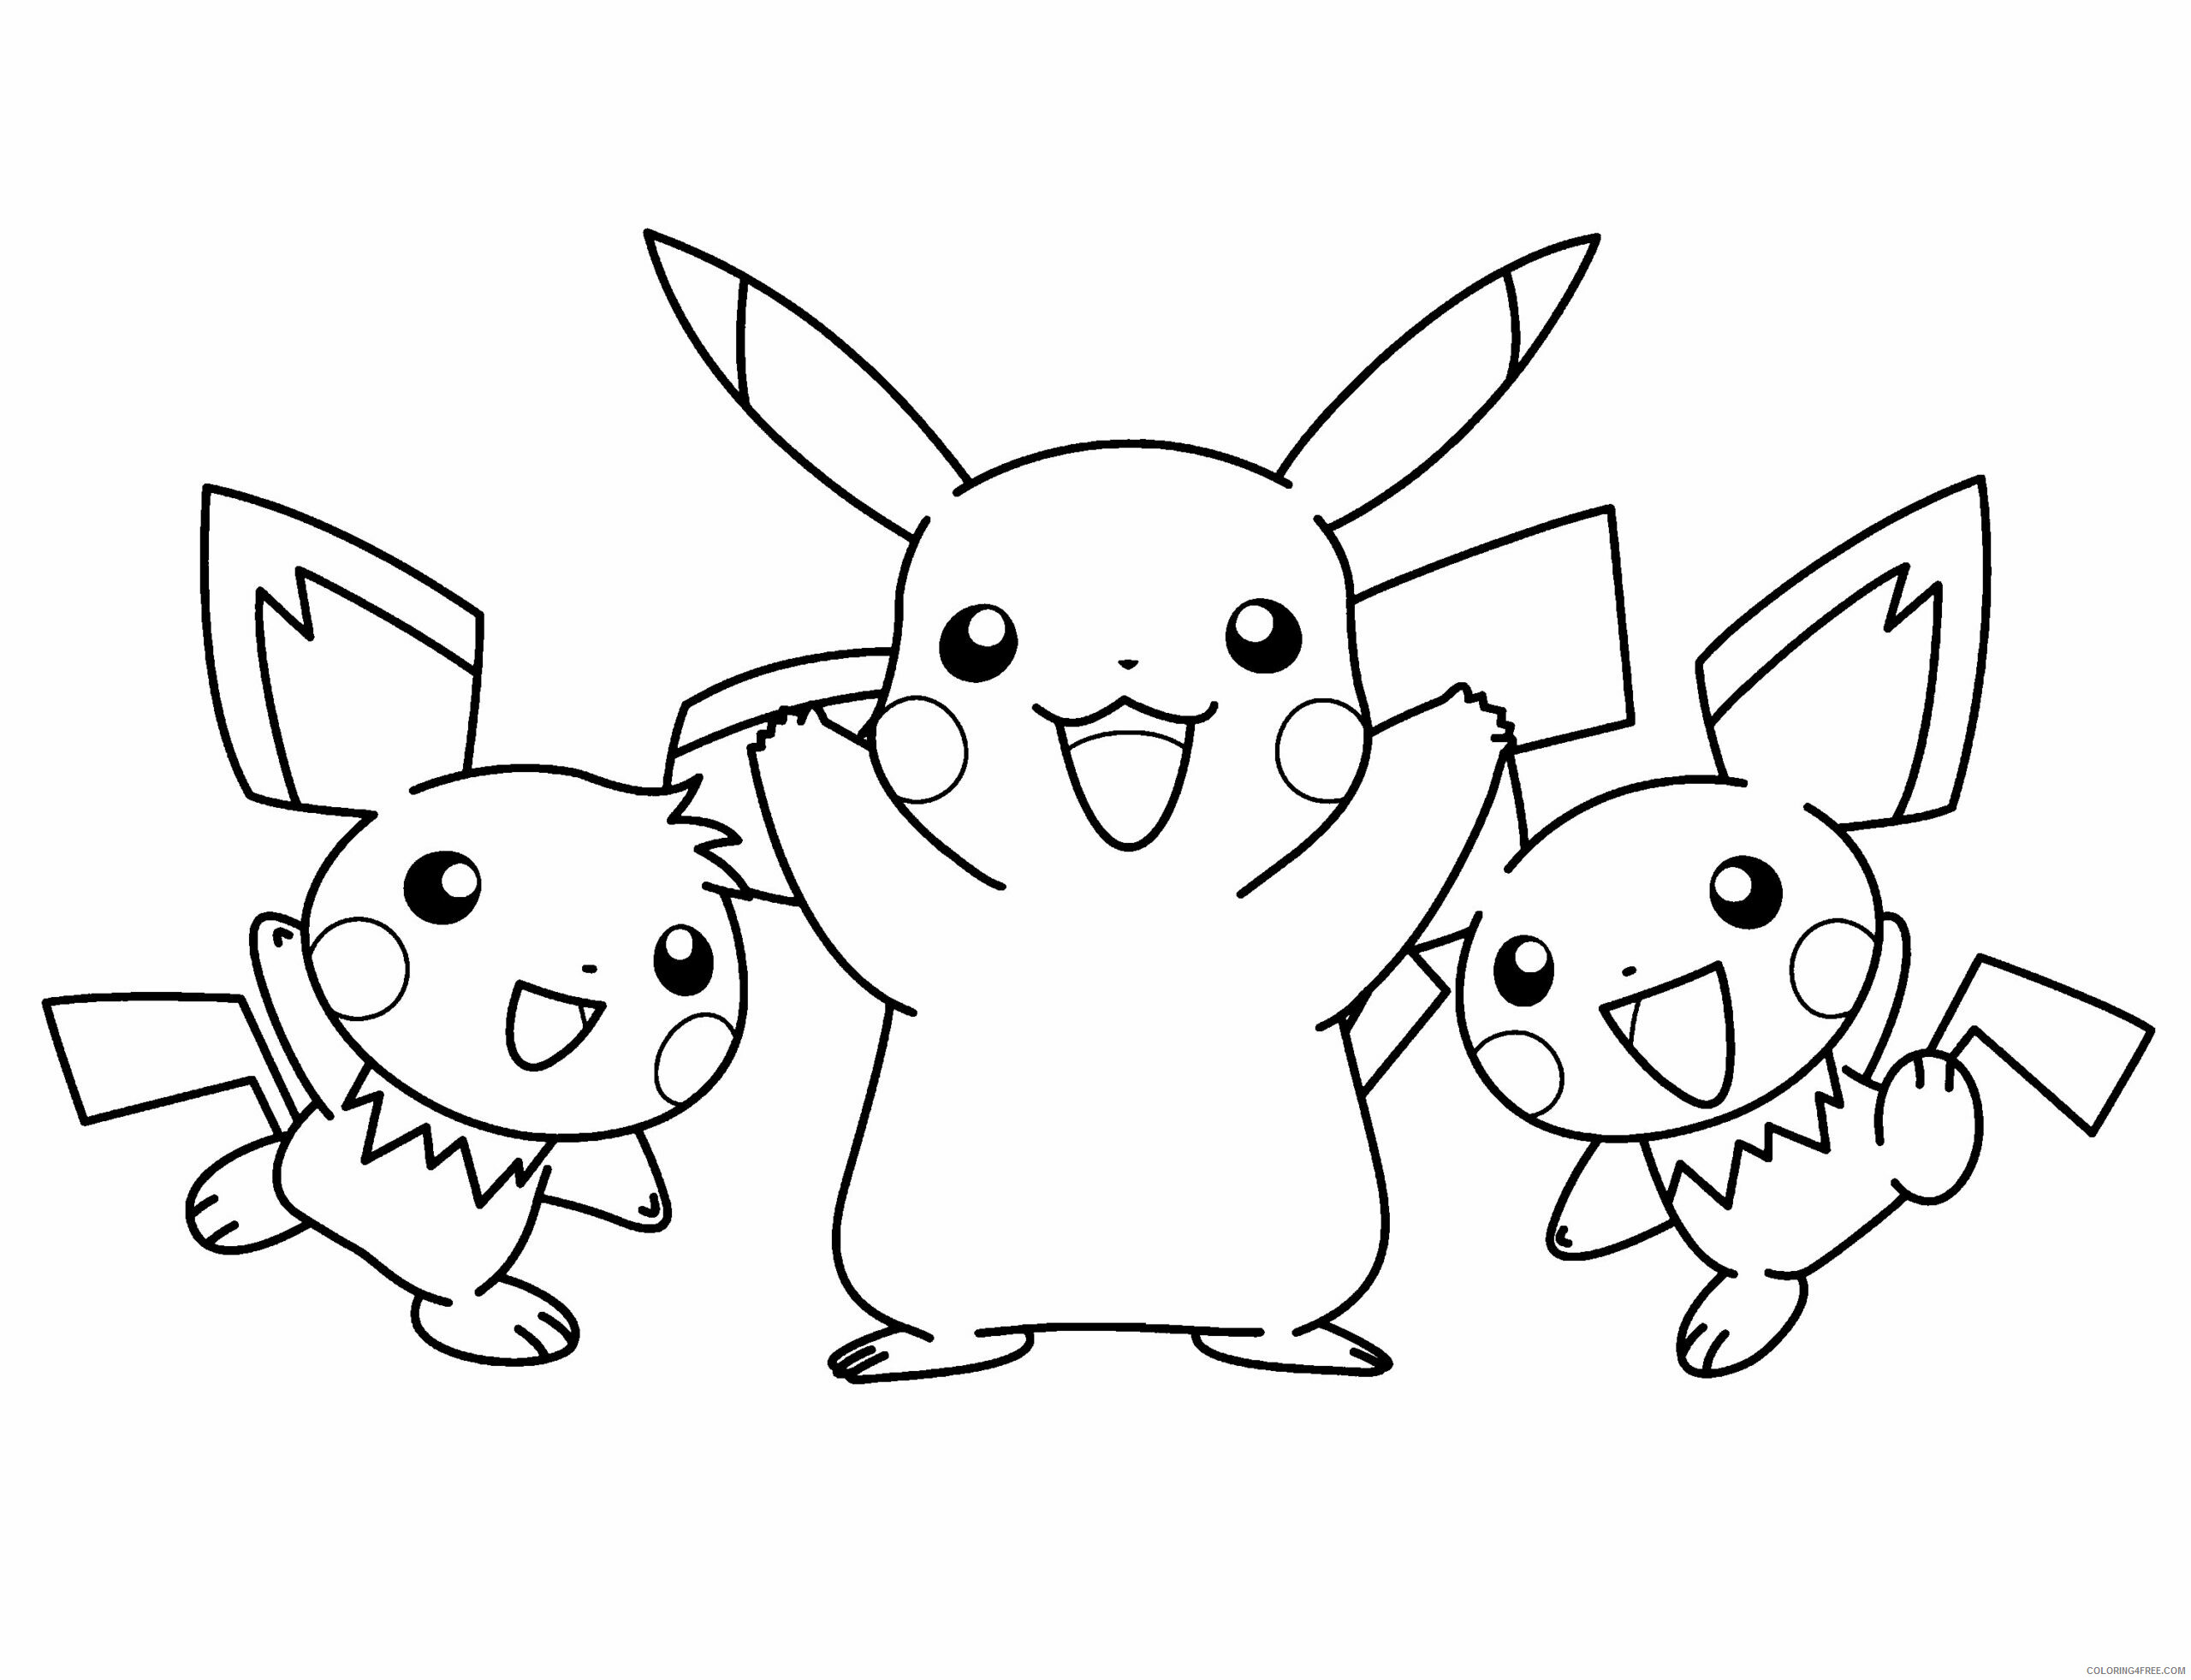 Pichu Pokemon Characters Printable Coloring Pages Pikachu and pichu Pokemon 2021 072 Coloring4free